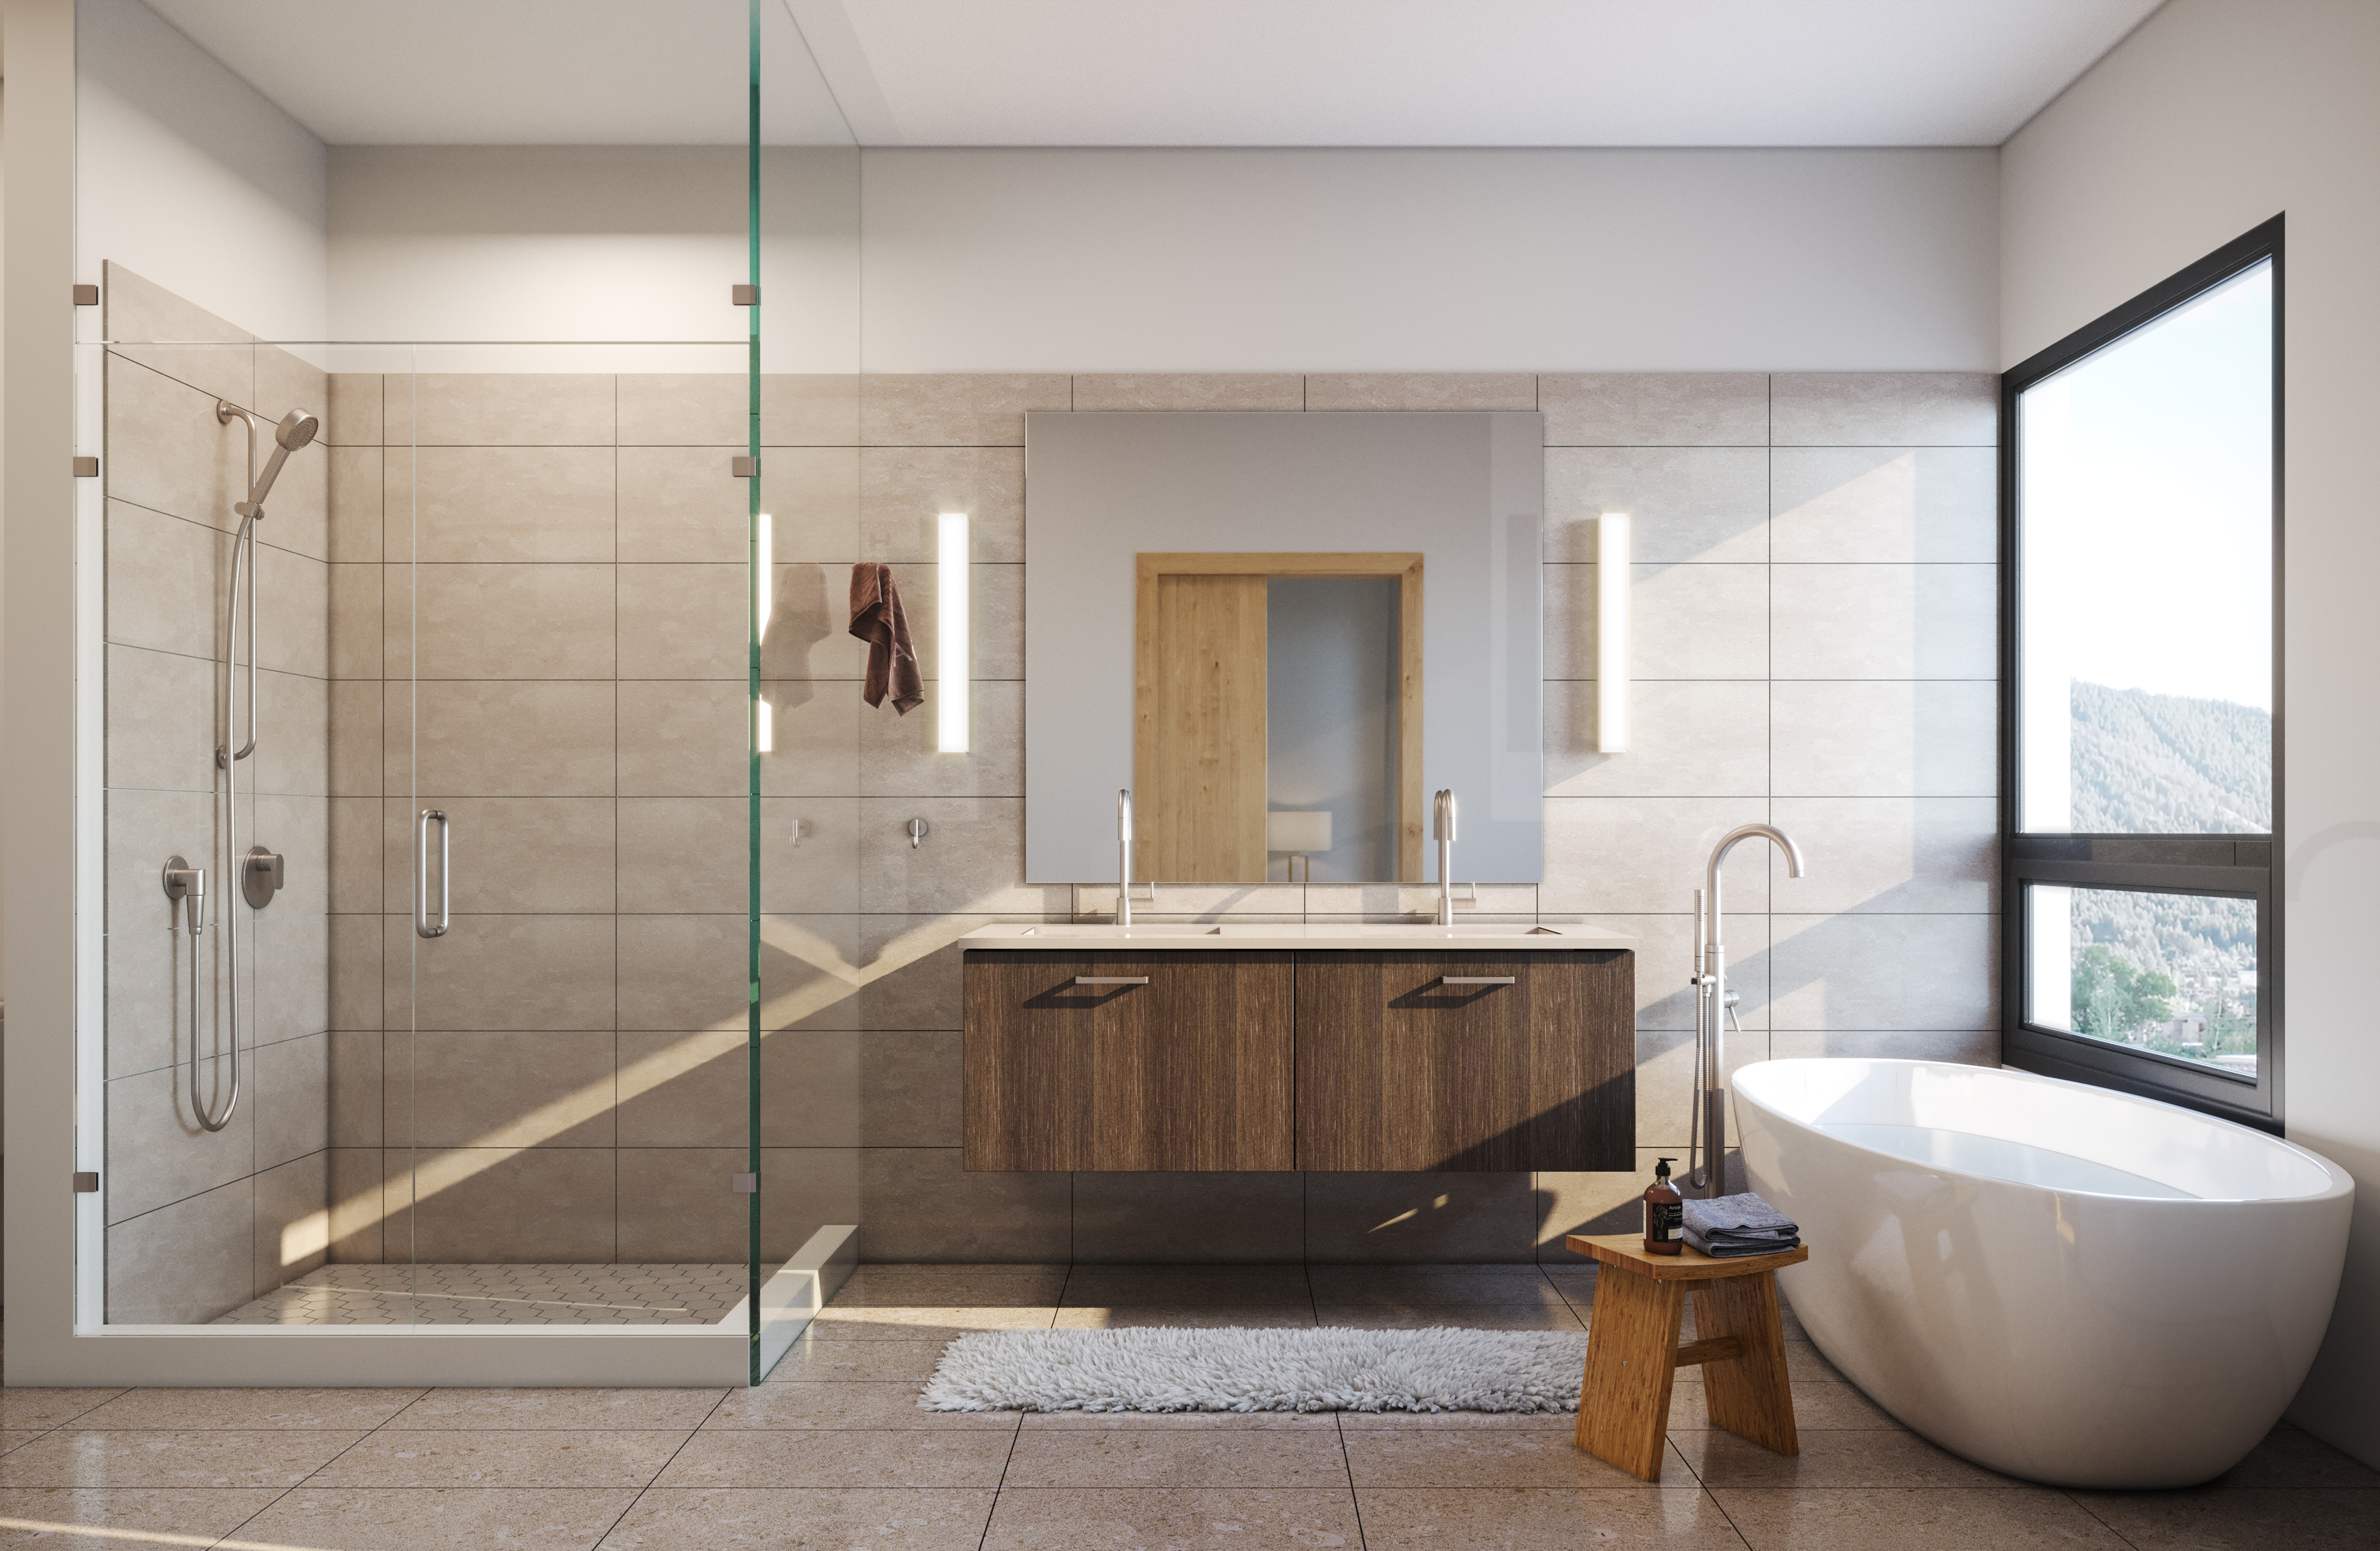 25 Ideas to Transform Your Bathroom Into a Spa